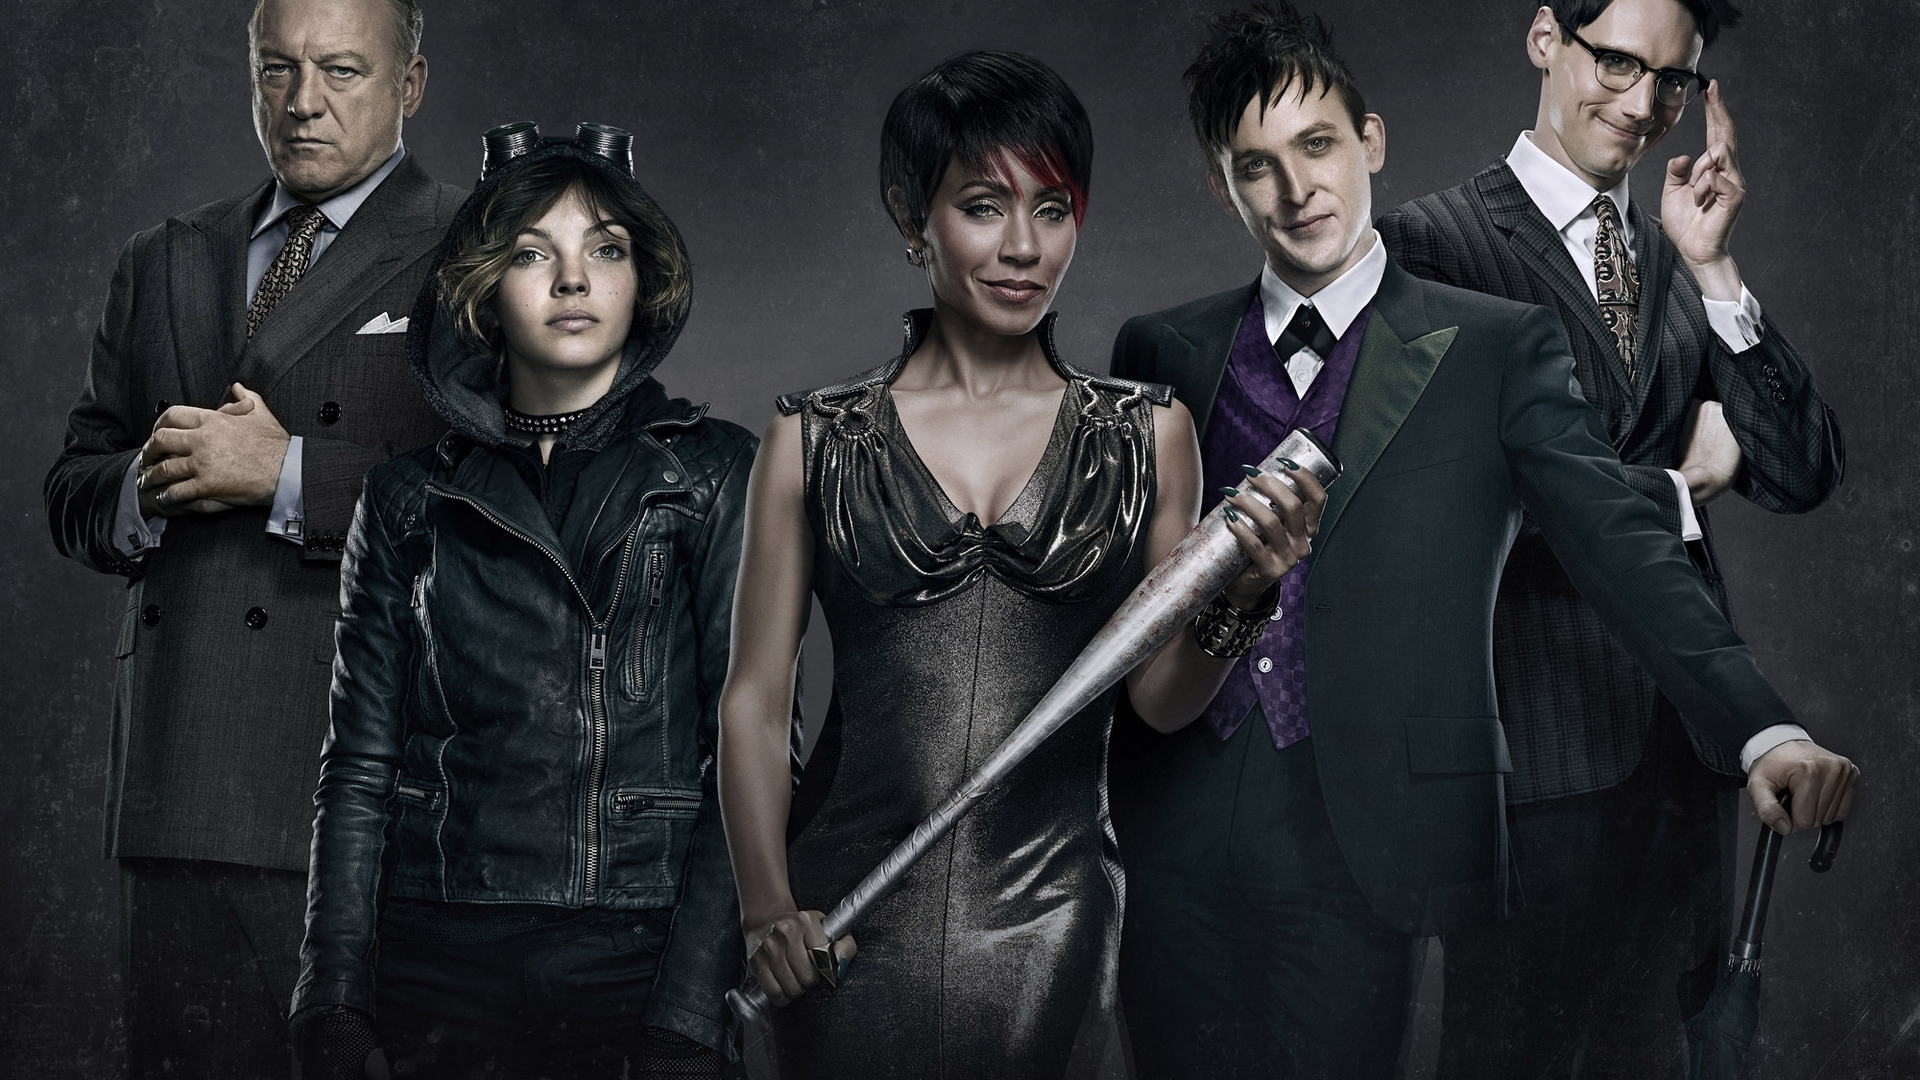 Gotham Villain Cast for 1920 x 1080 HDTV 1080p resolution